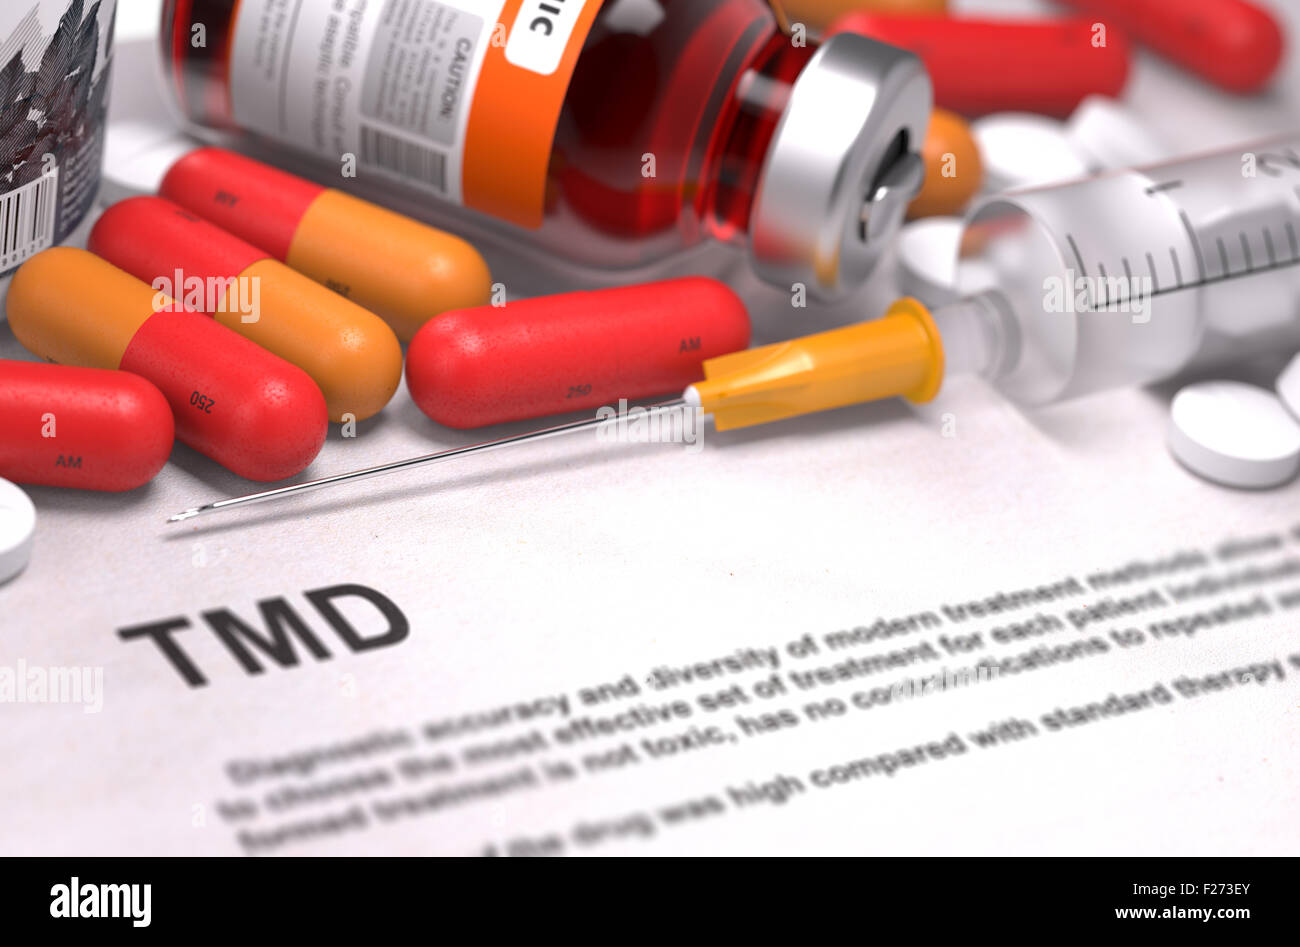 TMD Diagnosis. Medical Concept. Stock Photo